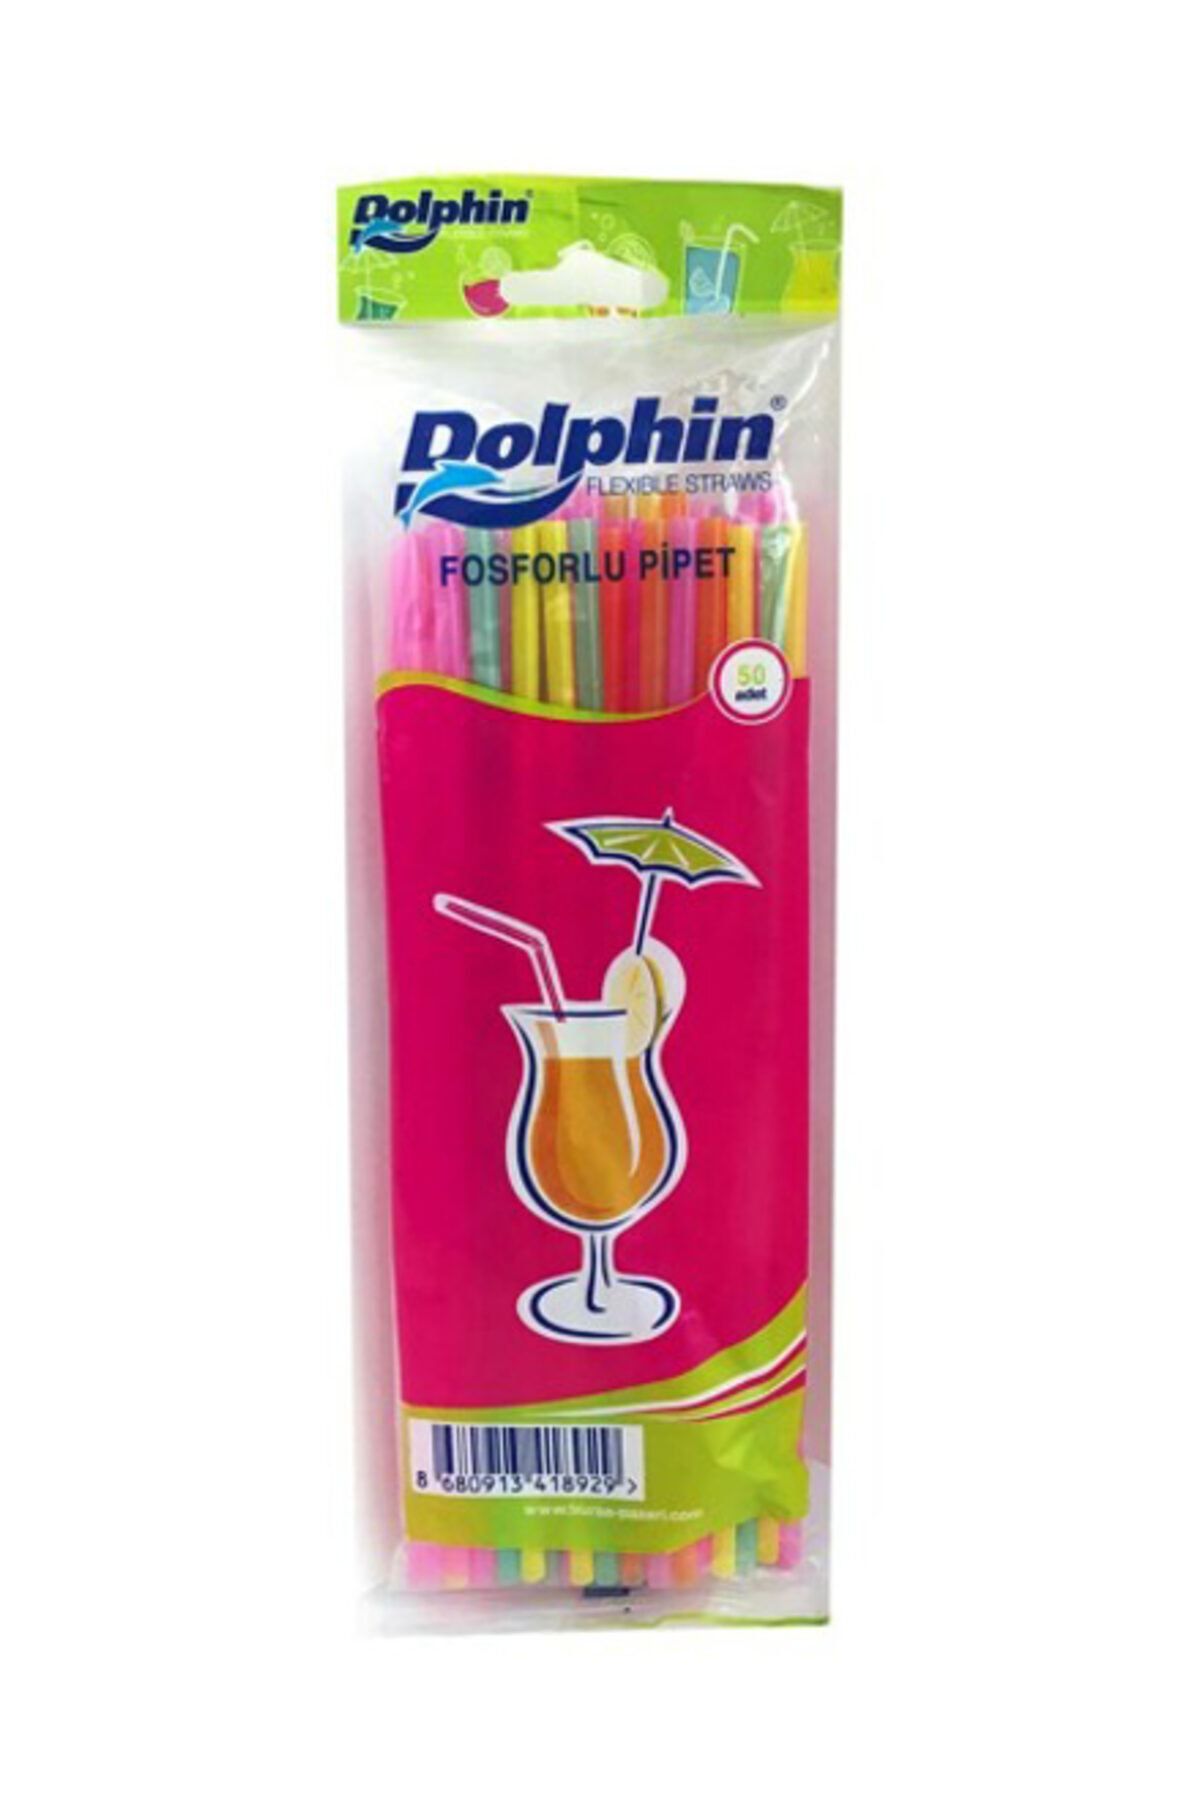 Roll Up Dolphin Fosforlu Pipet 50'li